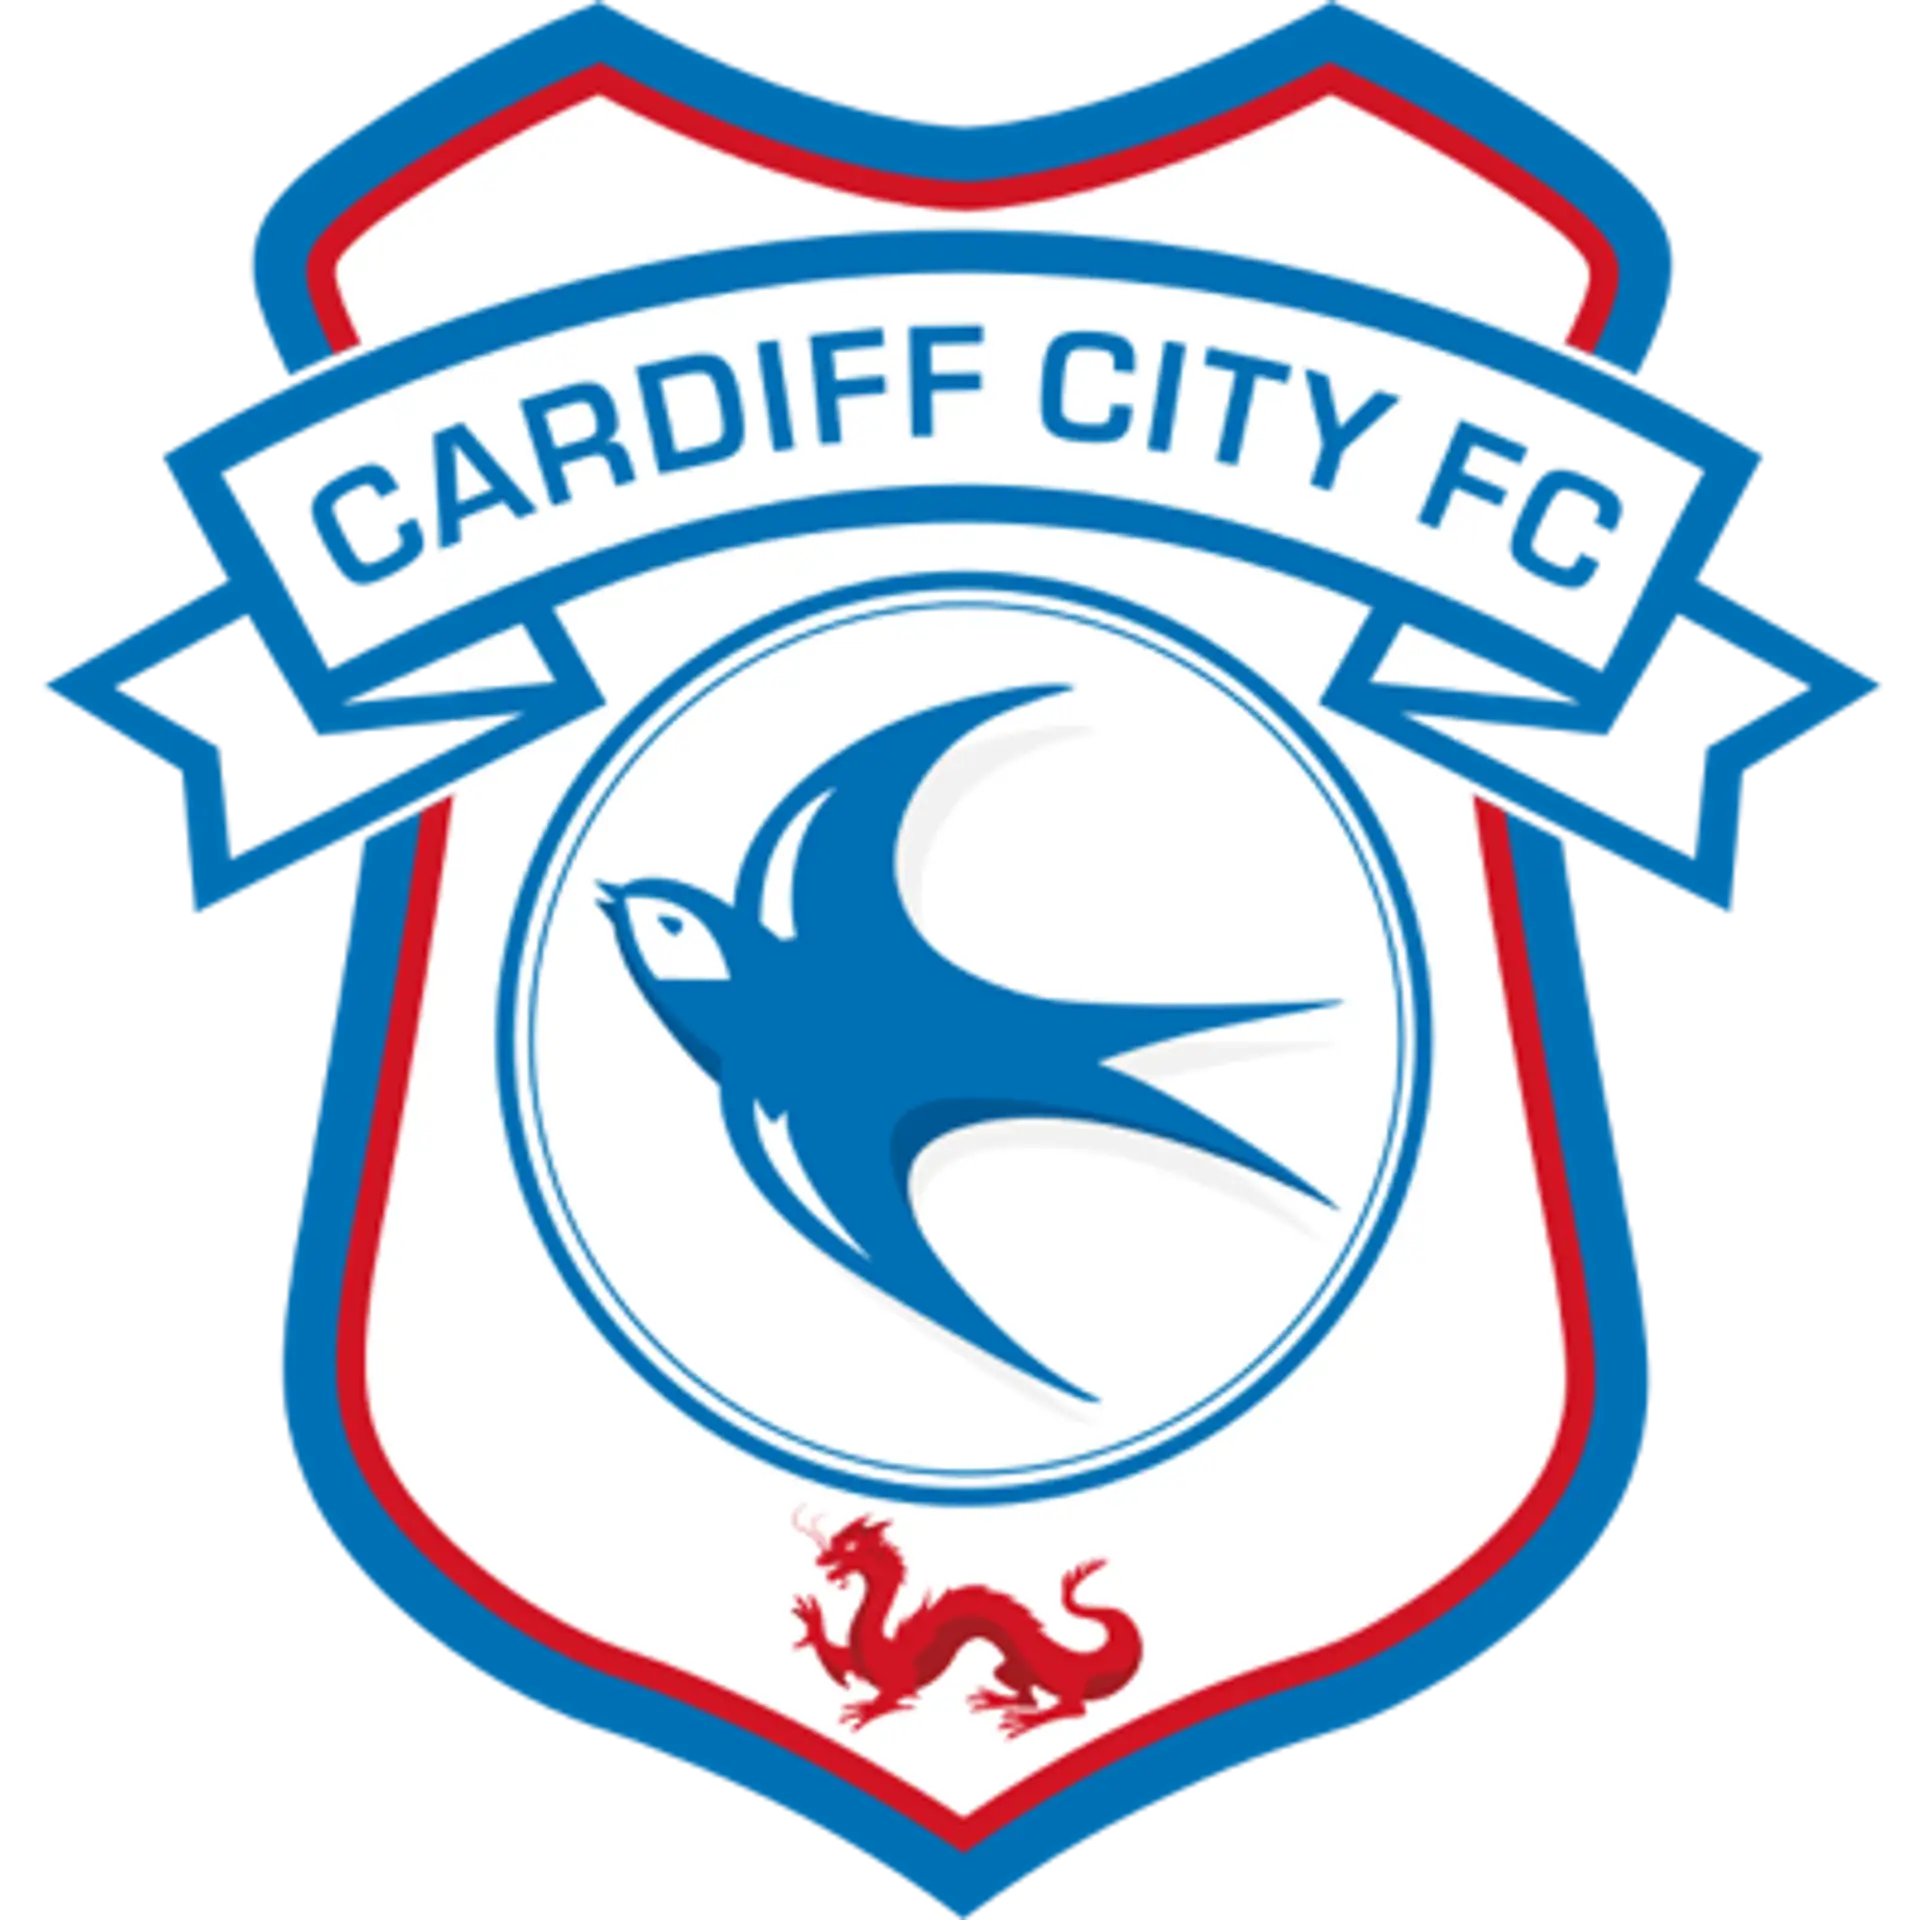 Cardiff City Plantilla